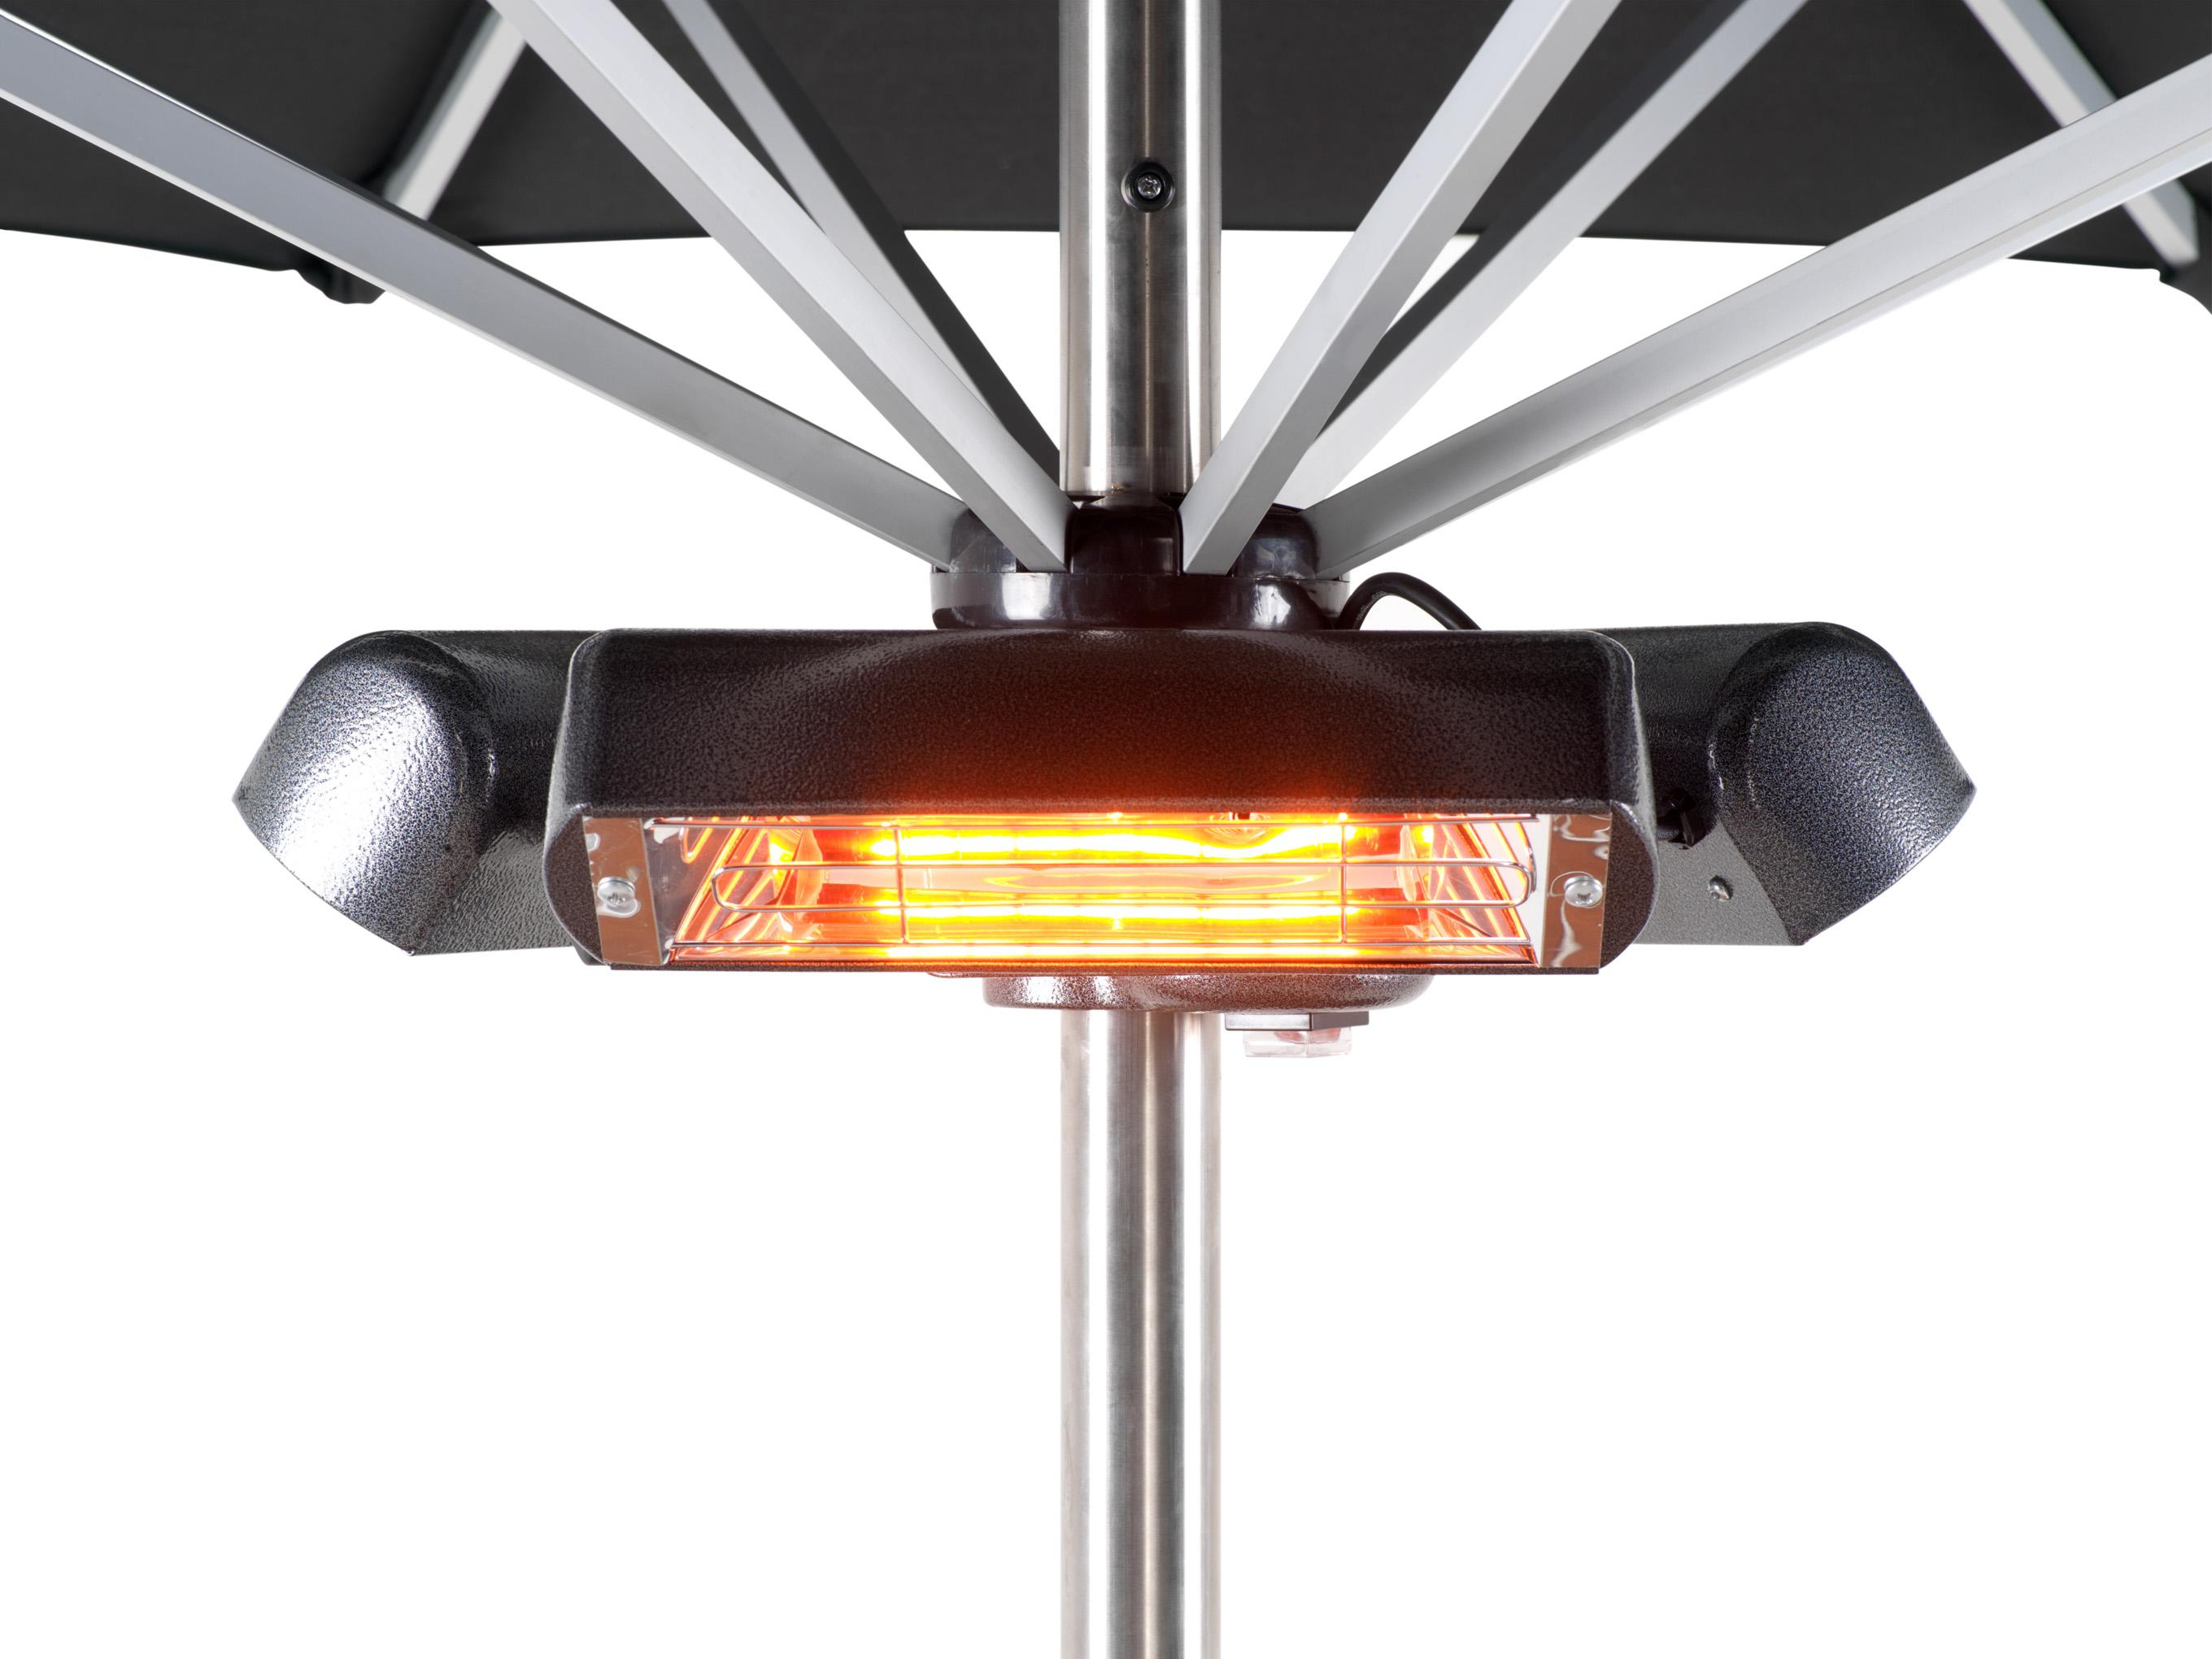 Heatmaster 24kw Slimline Super Halogen Bulb Electric Infrared Patio inside measurements 2720 X 2040